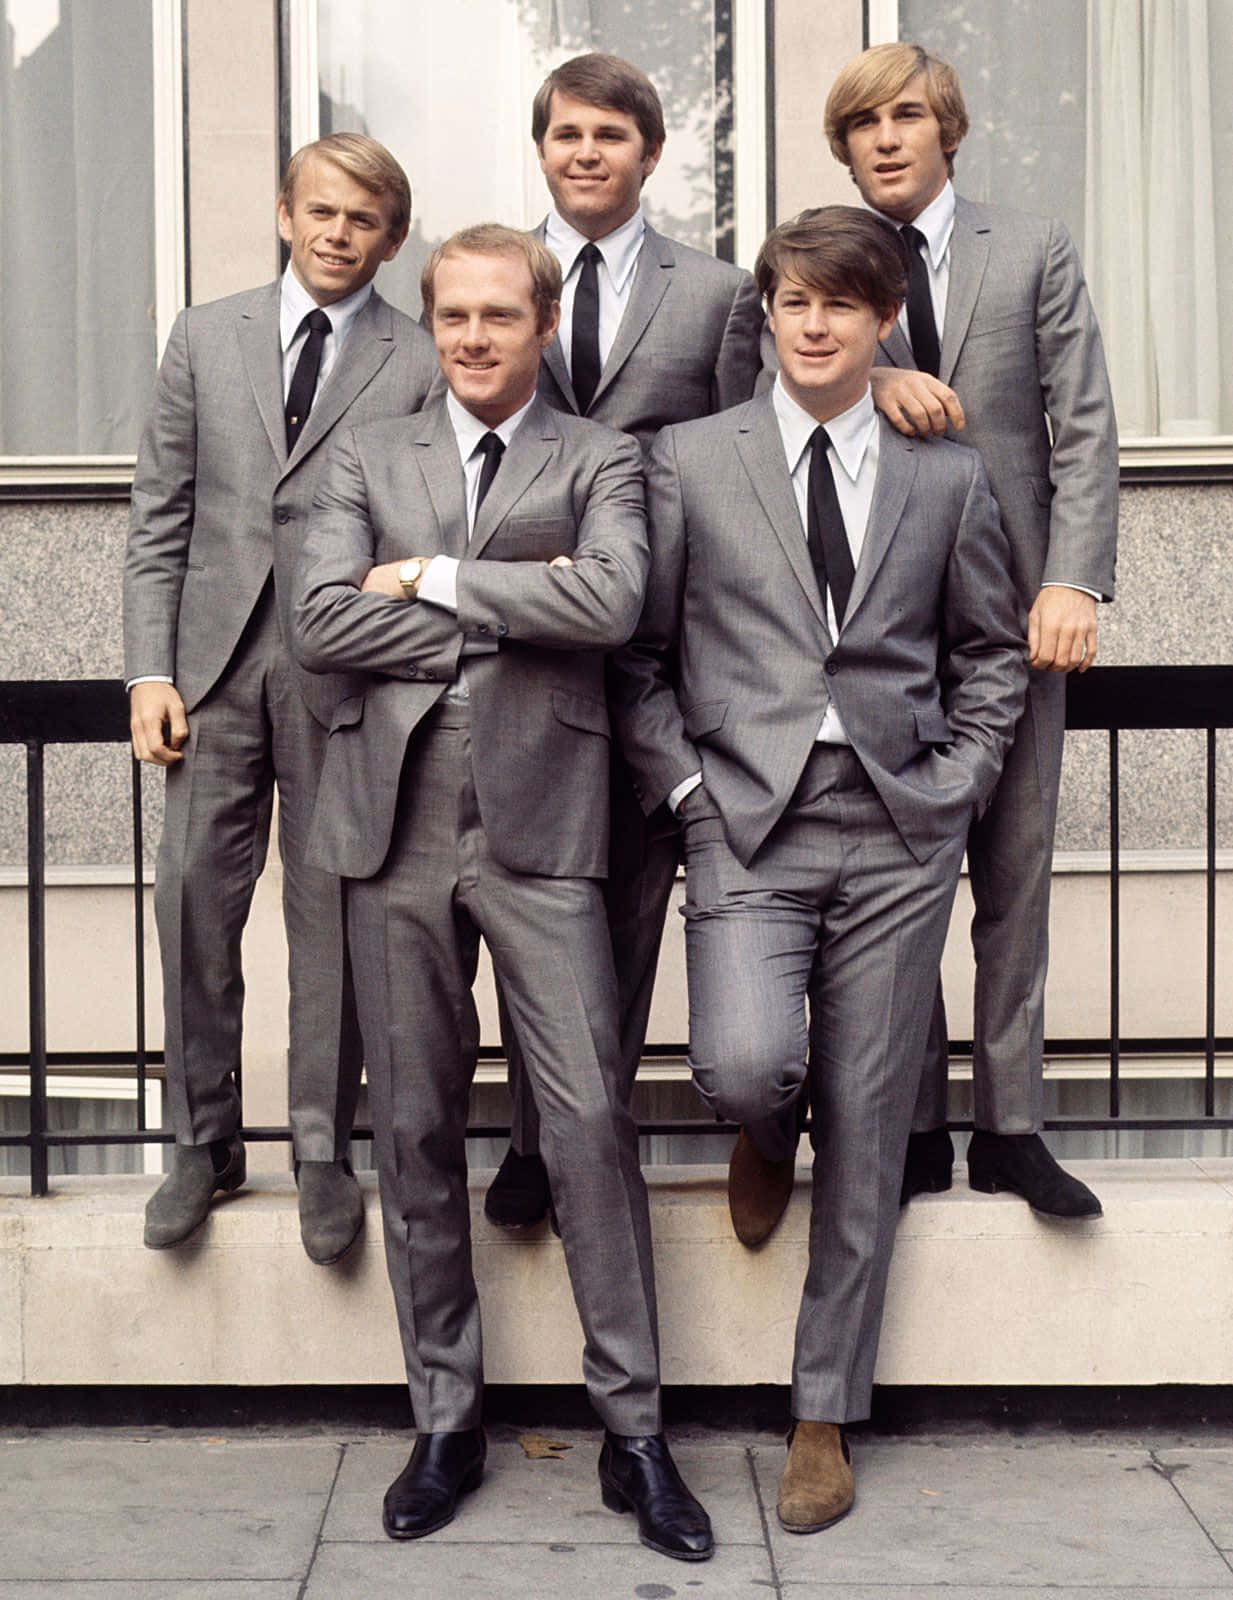 Beach Boys Tuxedo Portrait London 1966 Wallpaper